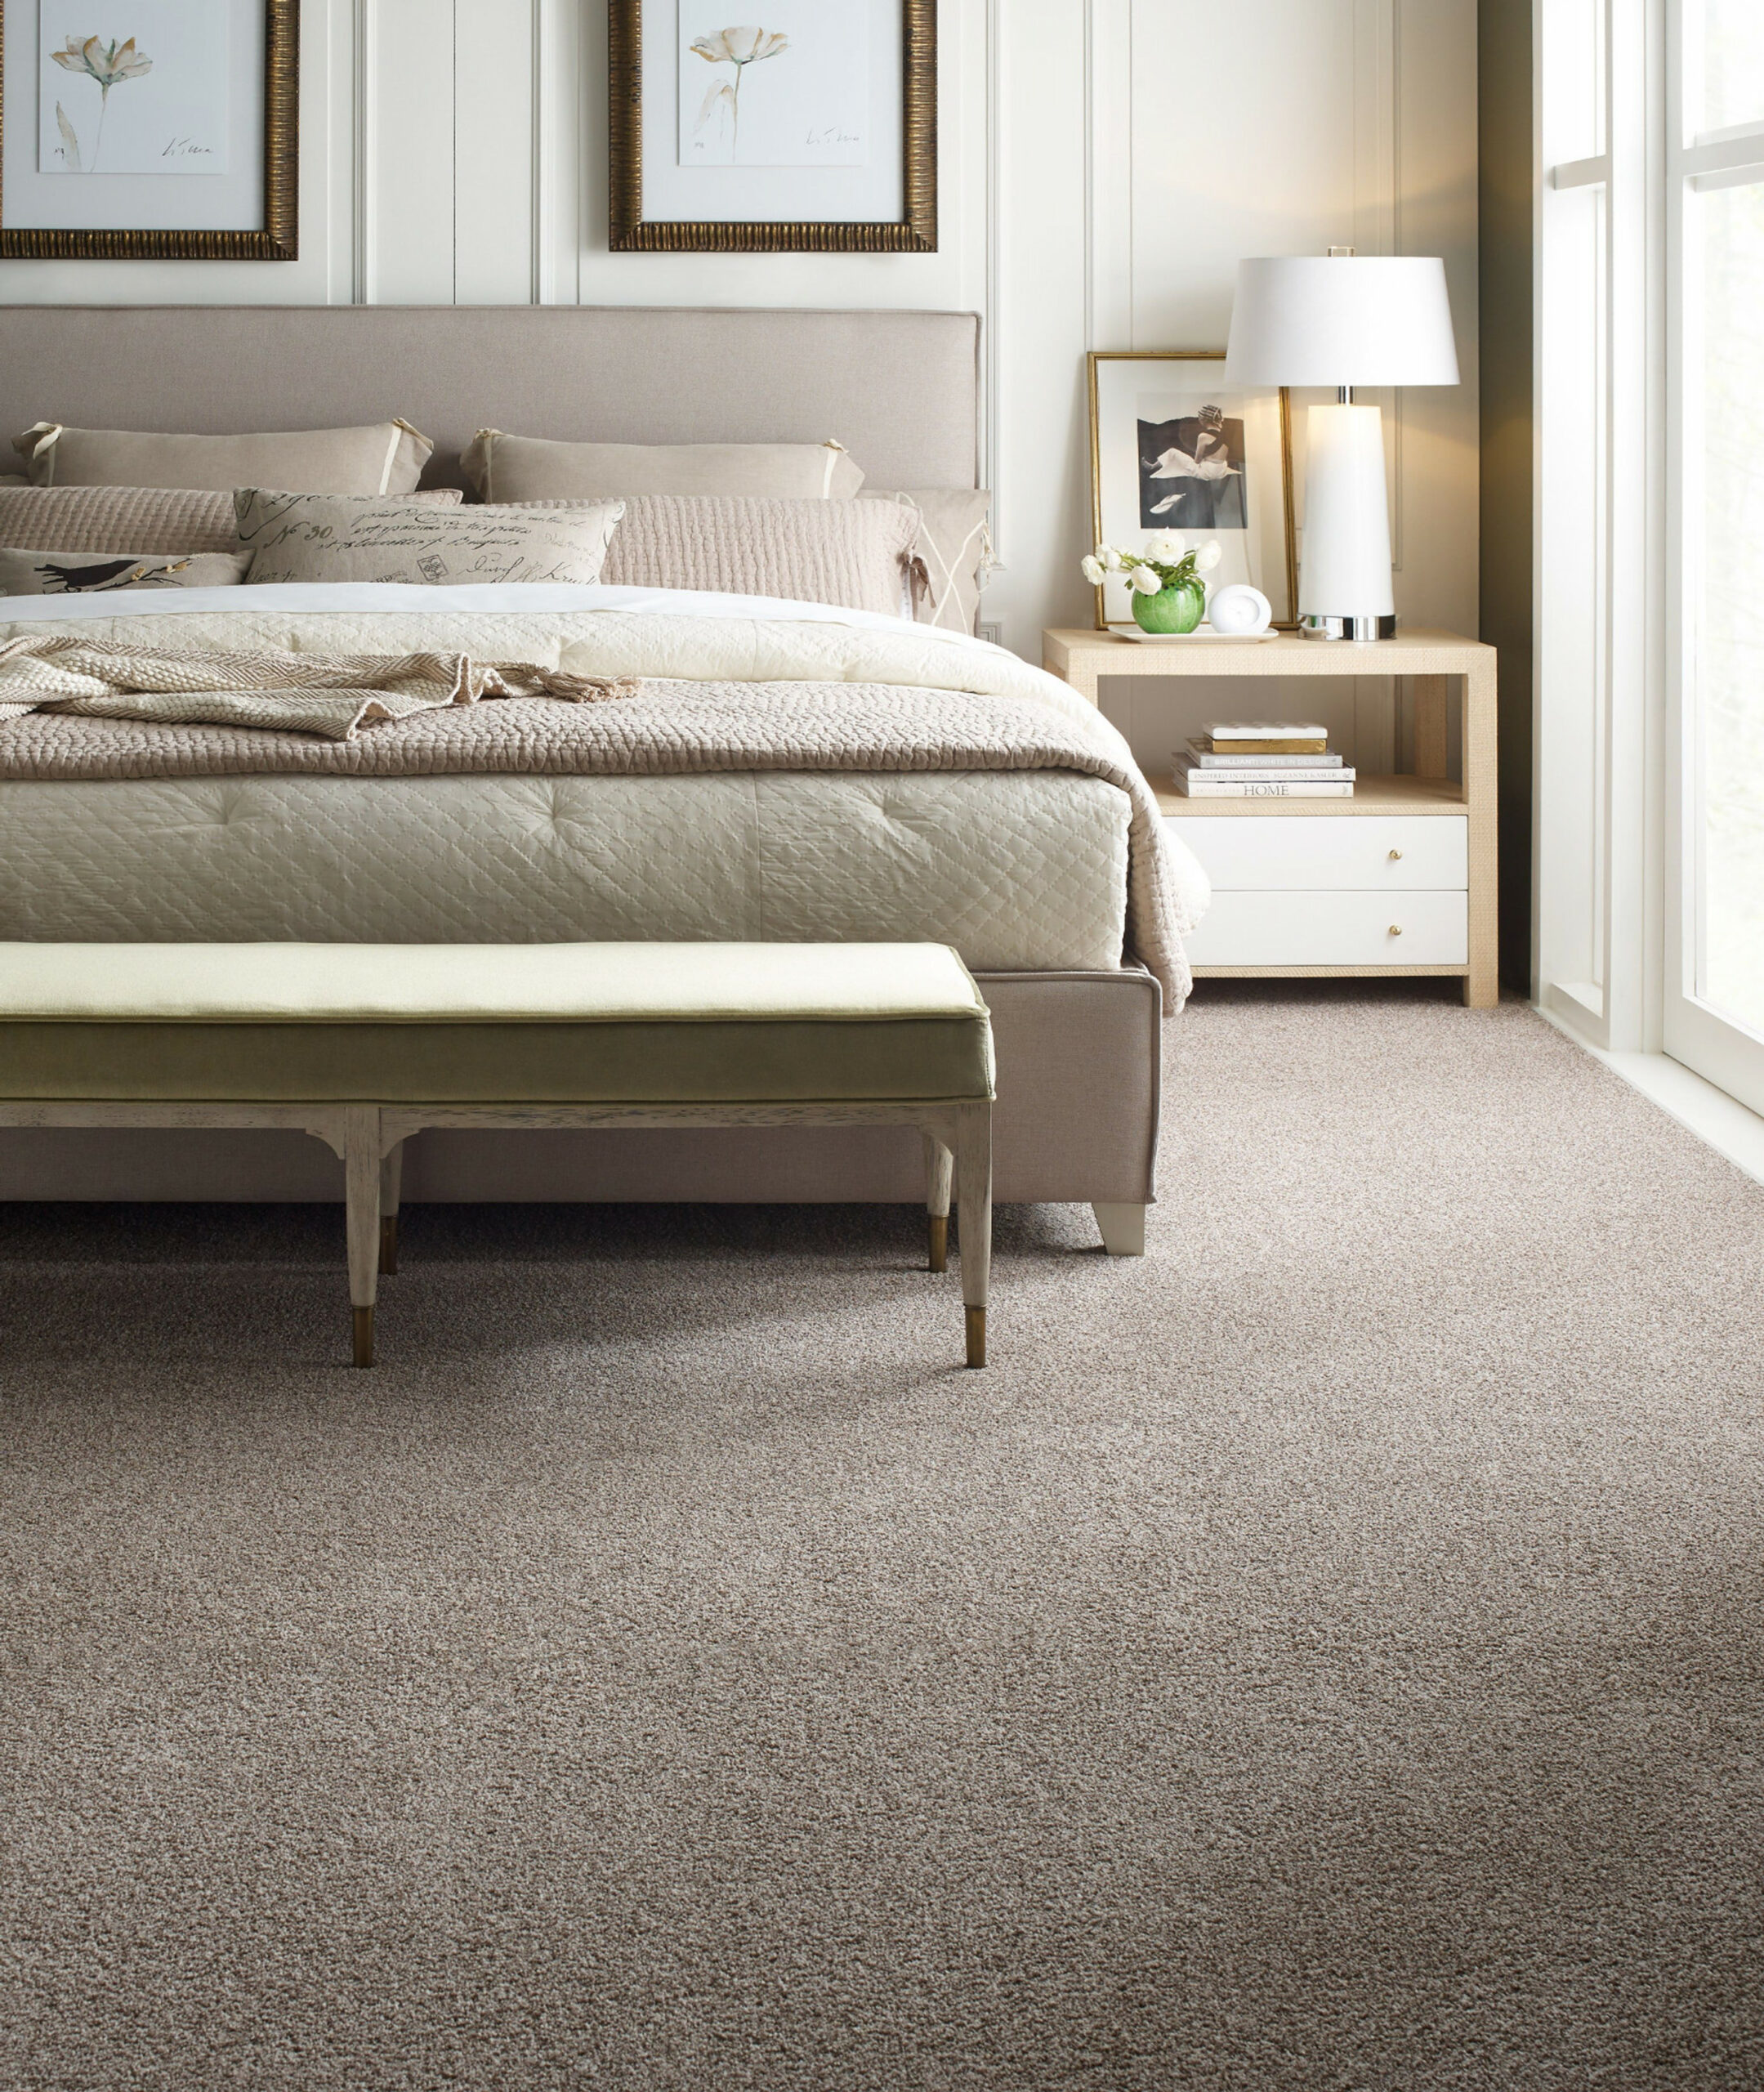 Square Yard Carpet: Top Carpet Design Trends of